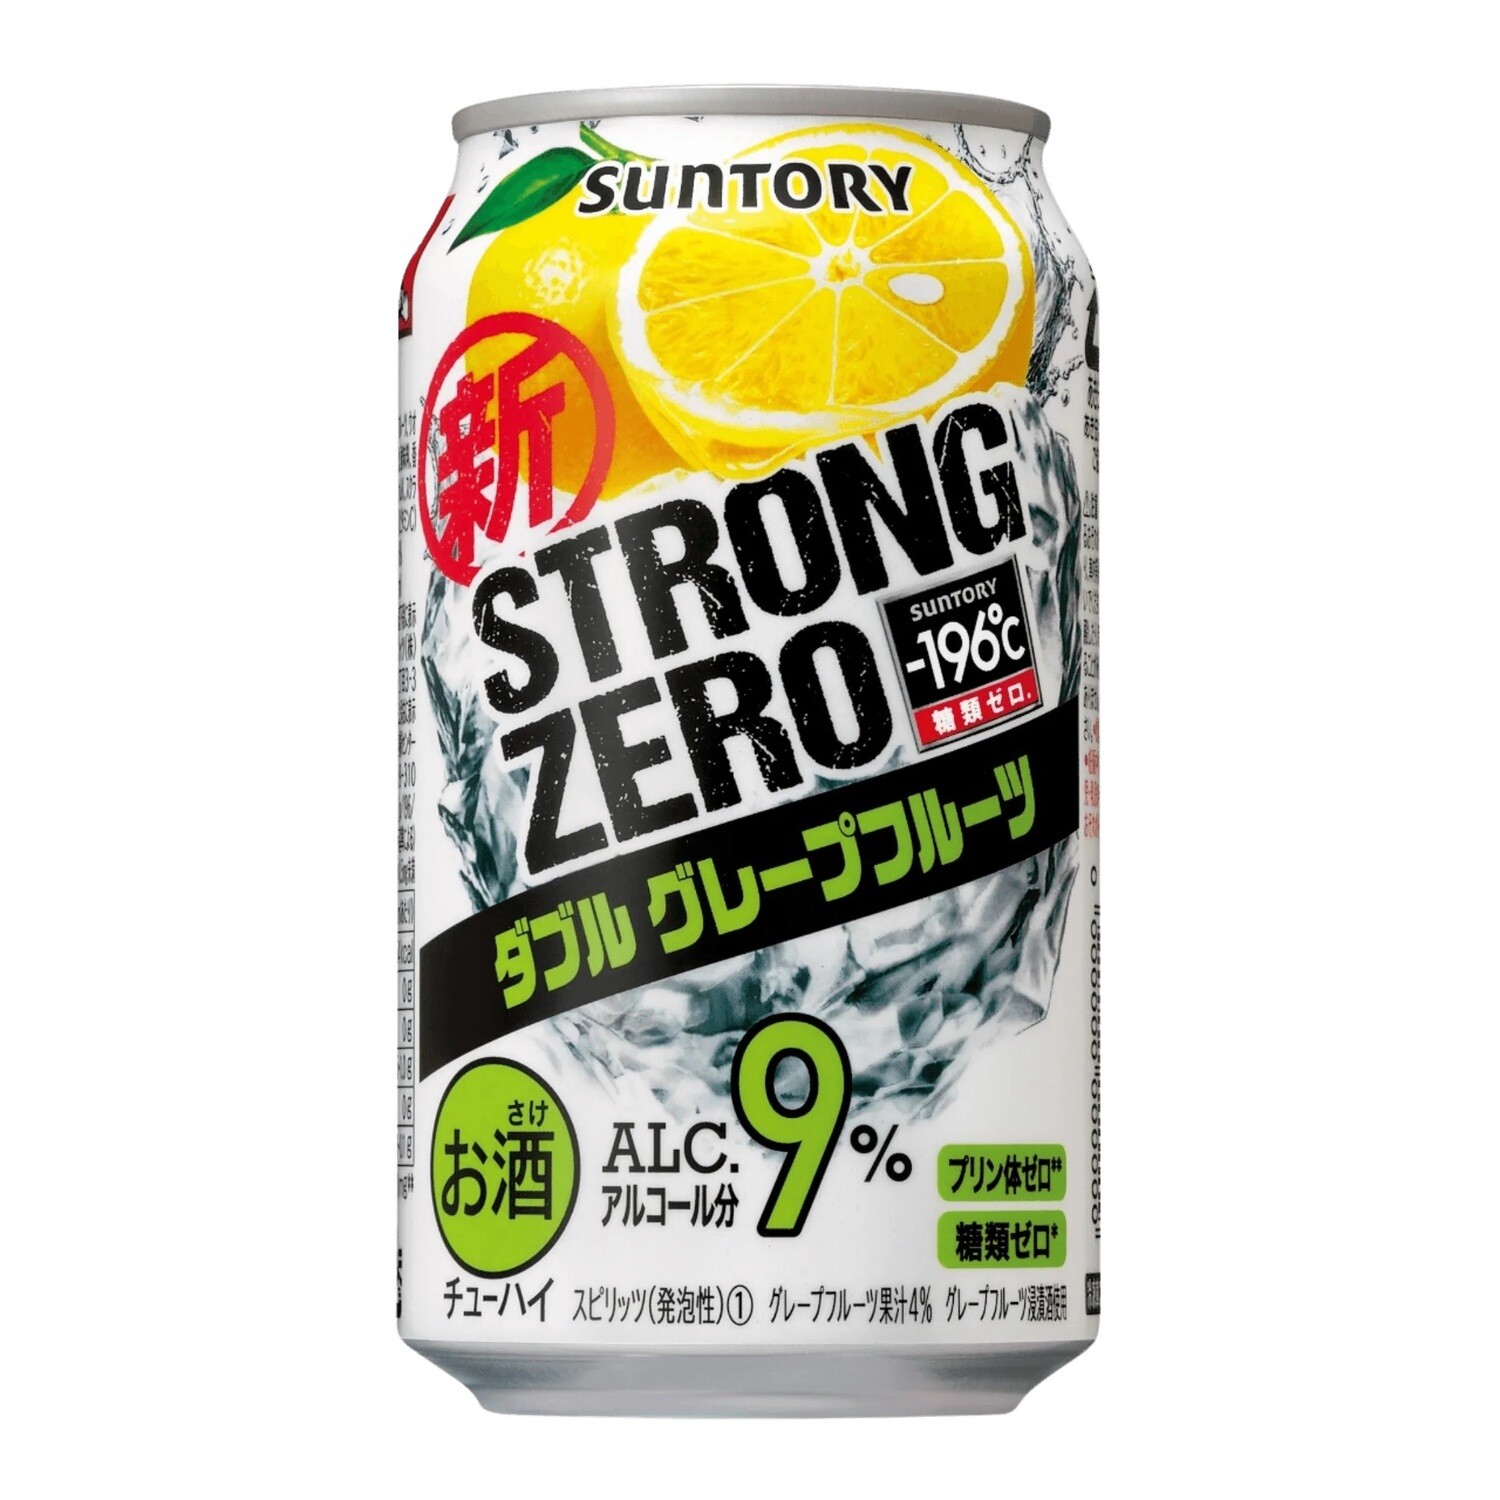 Suntory Strong Zero Double Grapefruit 350ml